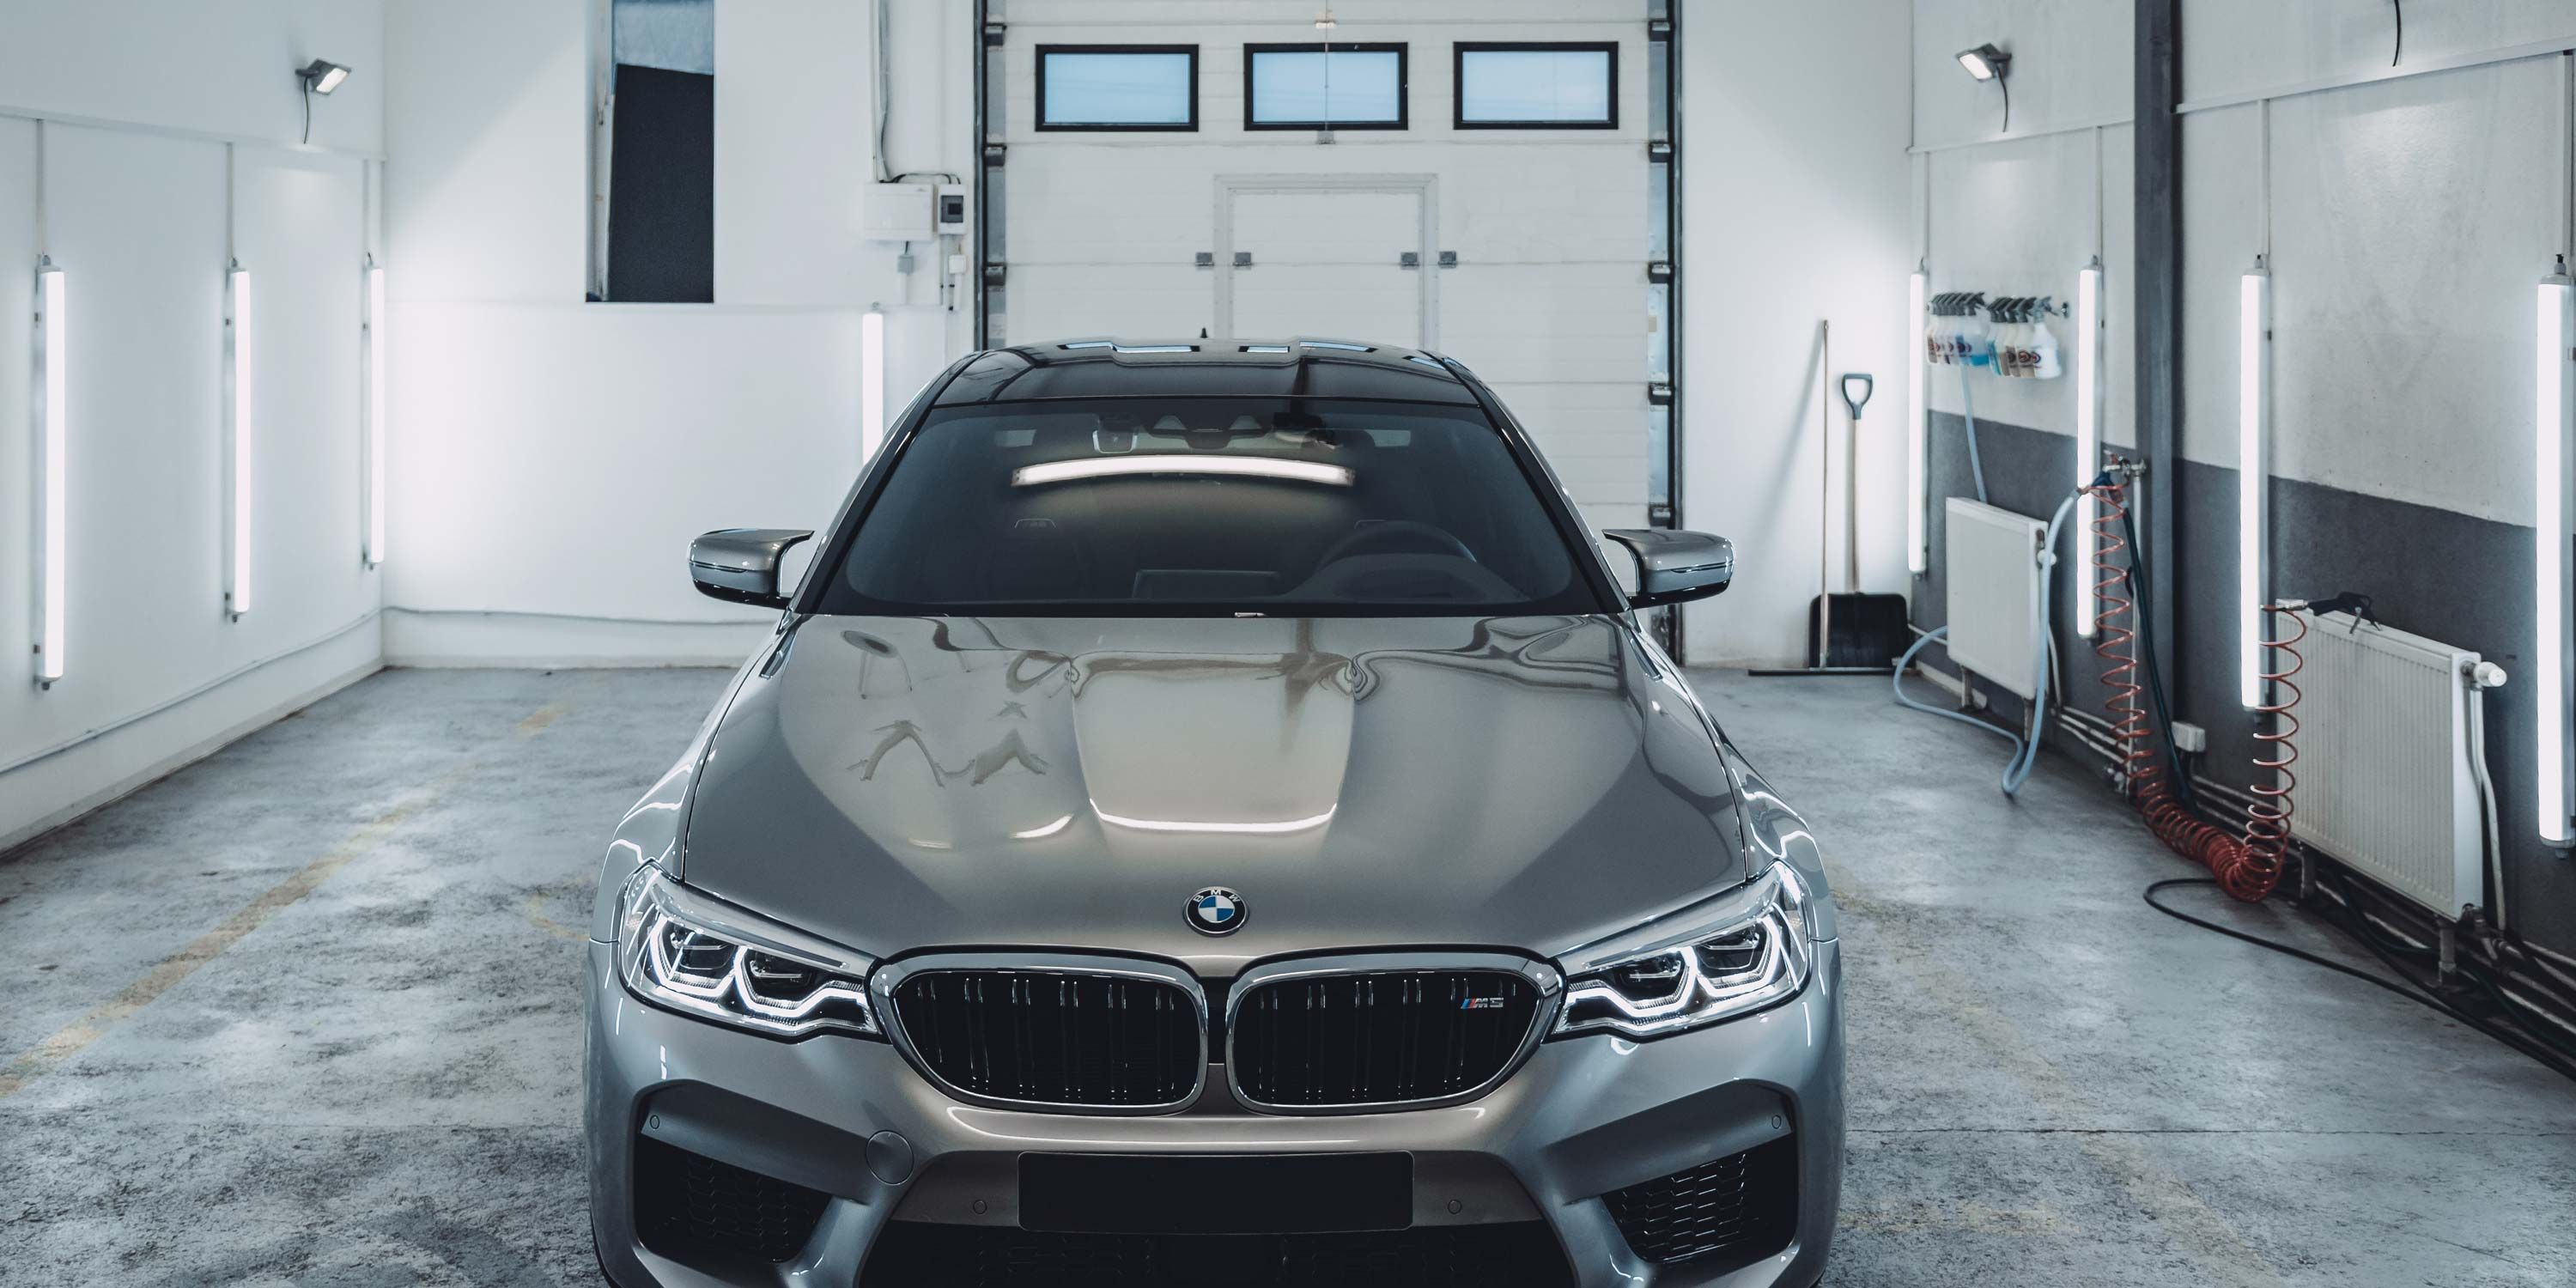 garage with silver BMW in the garage